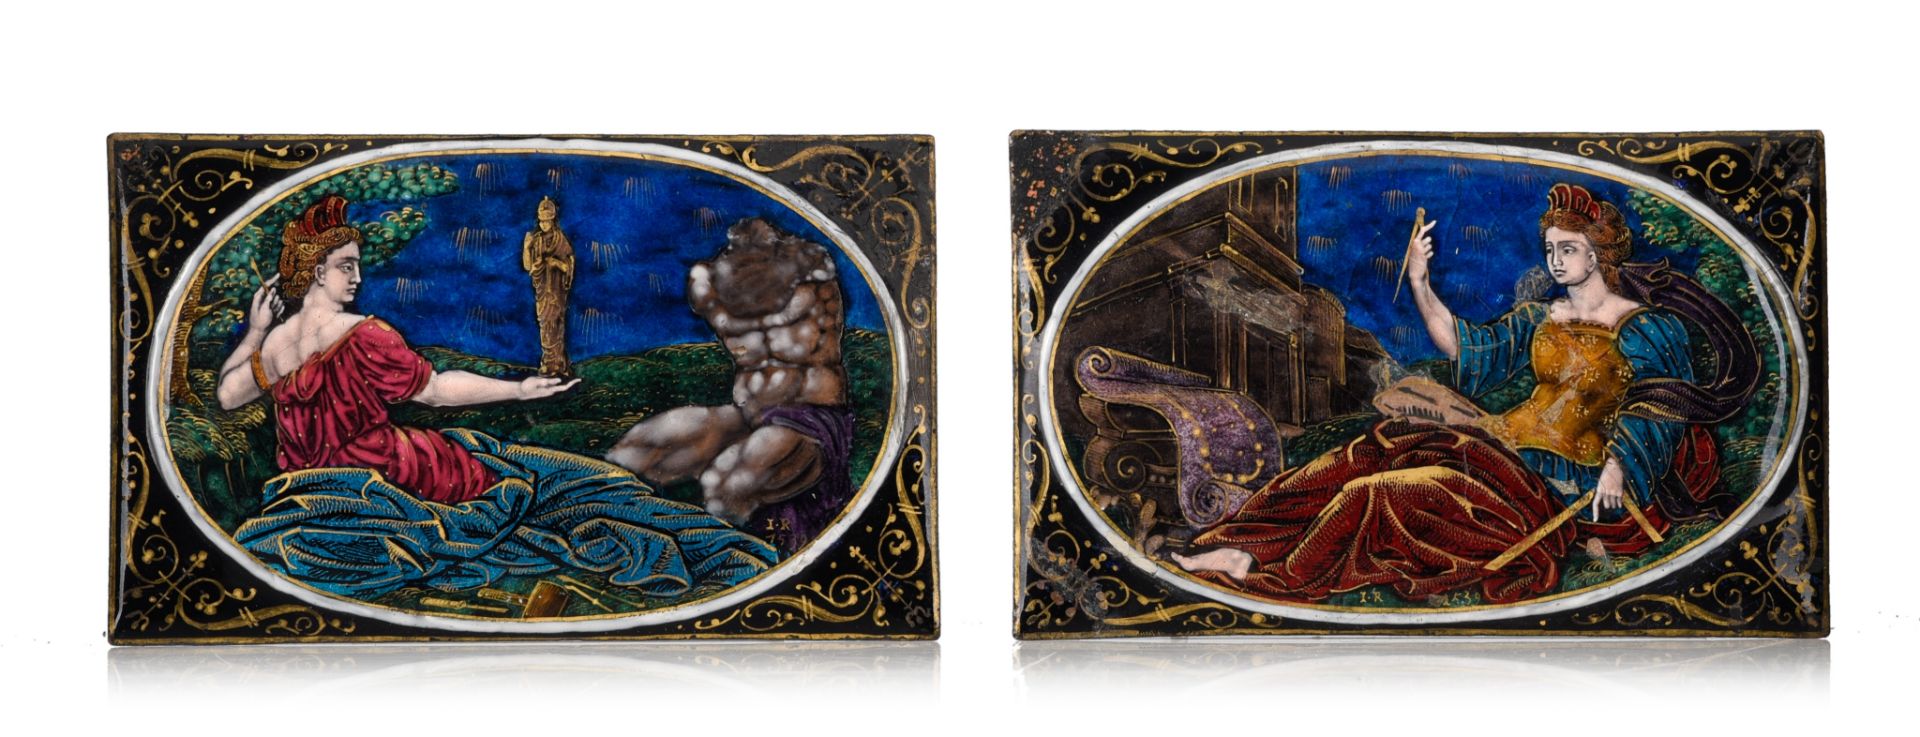 A Limoges enamel bowl (19thC) and 2 Limoges enamel plaques, (16thC), H 4,2 / 12,5 x 7,5 cm - Image 2 of 20